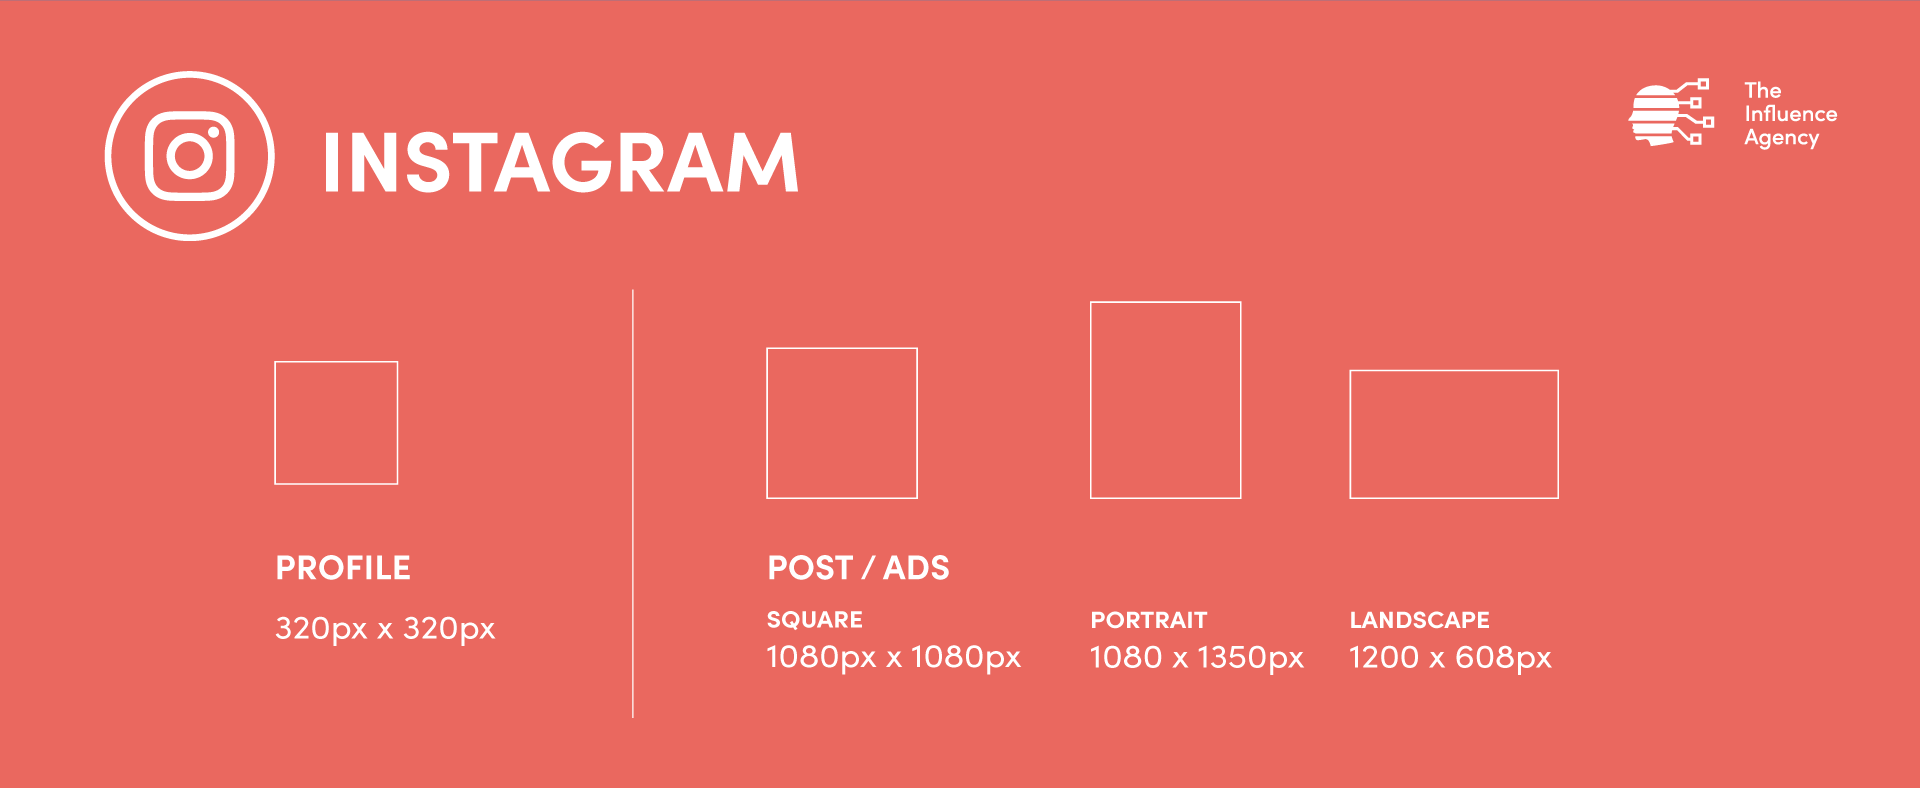 Diagrams of Instagram image dimensions.